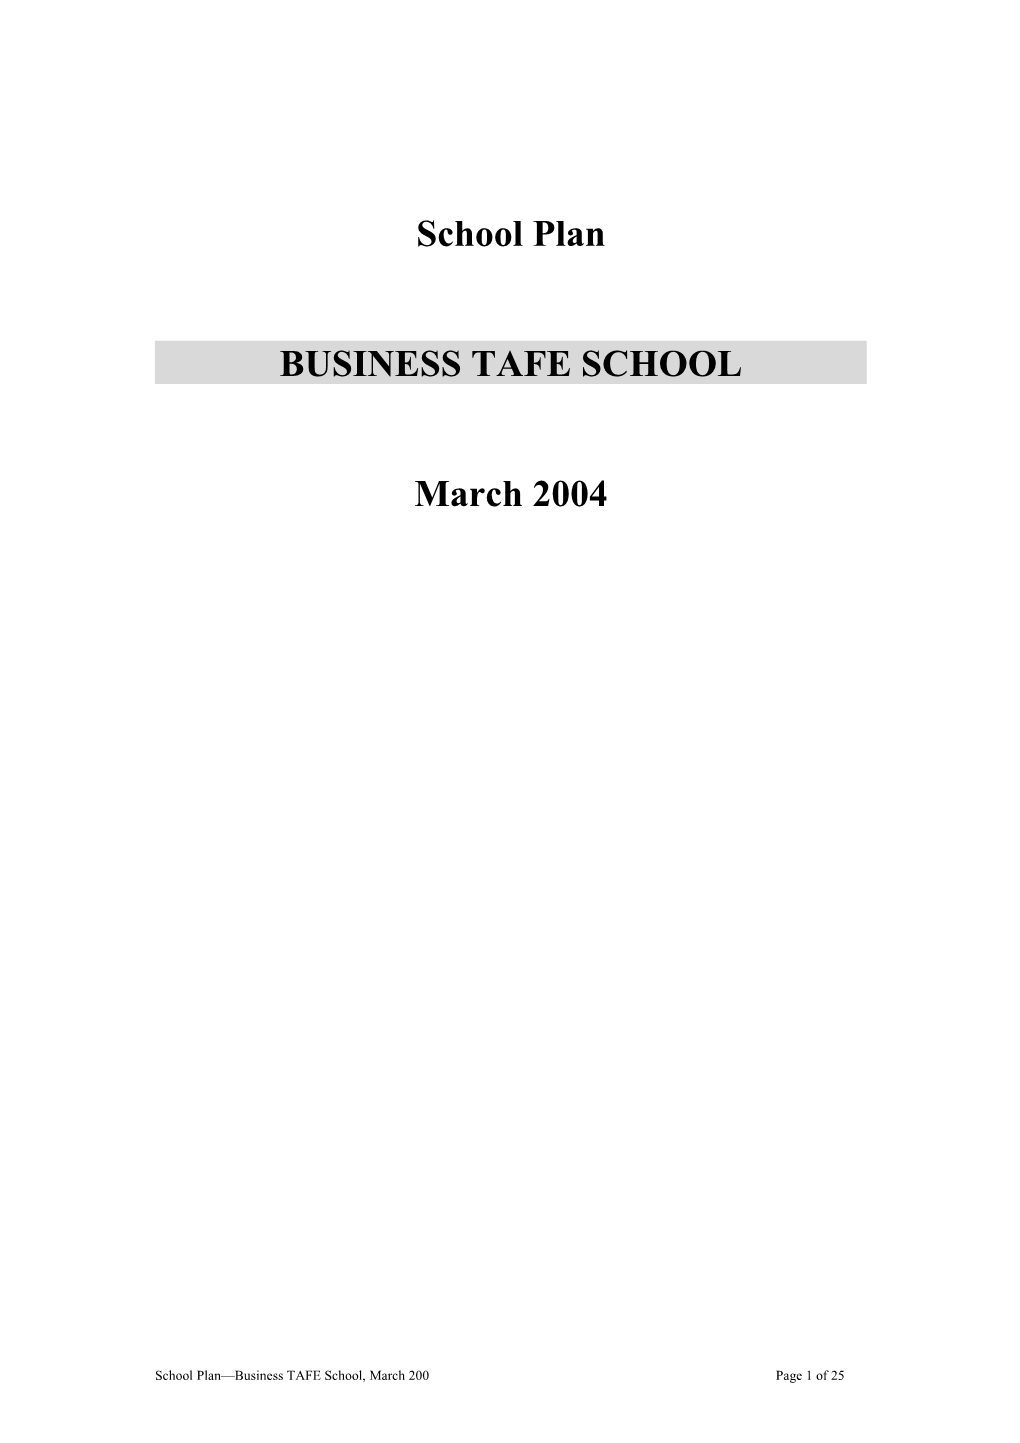 Business Tafe School